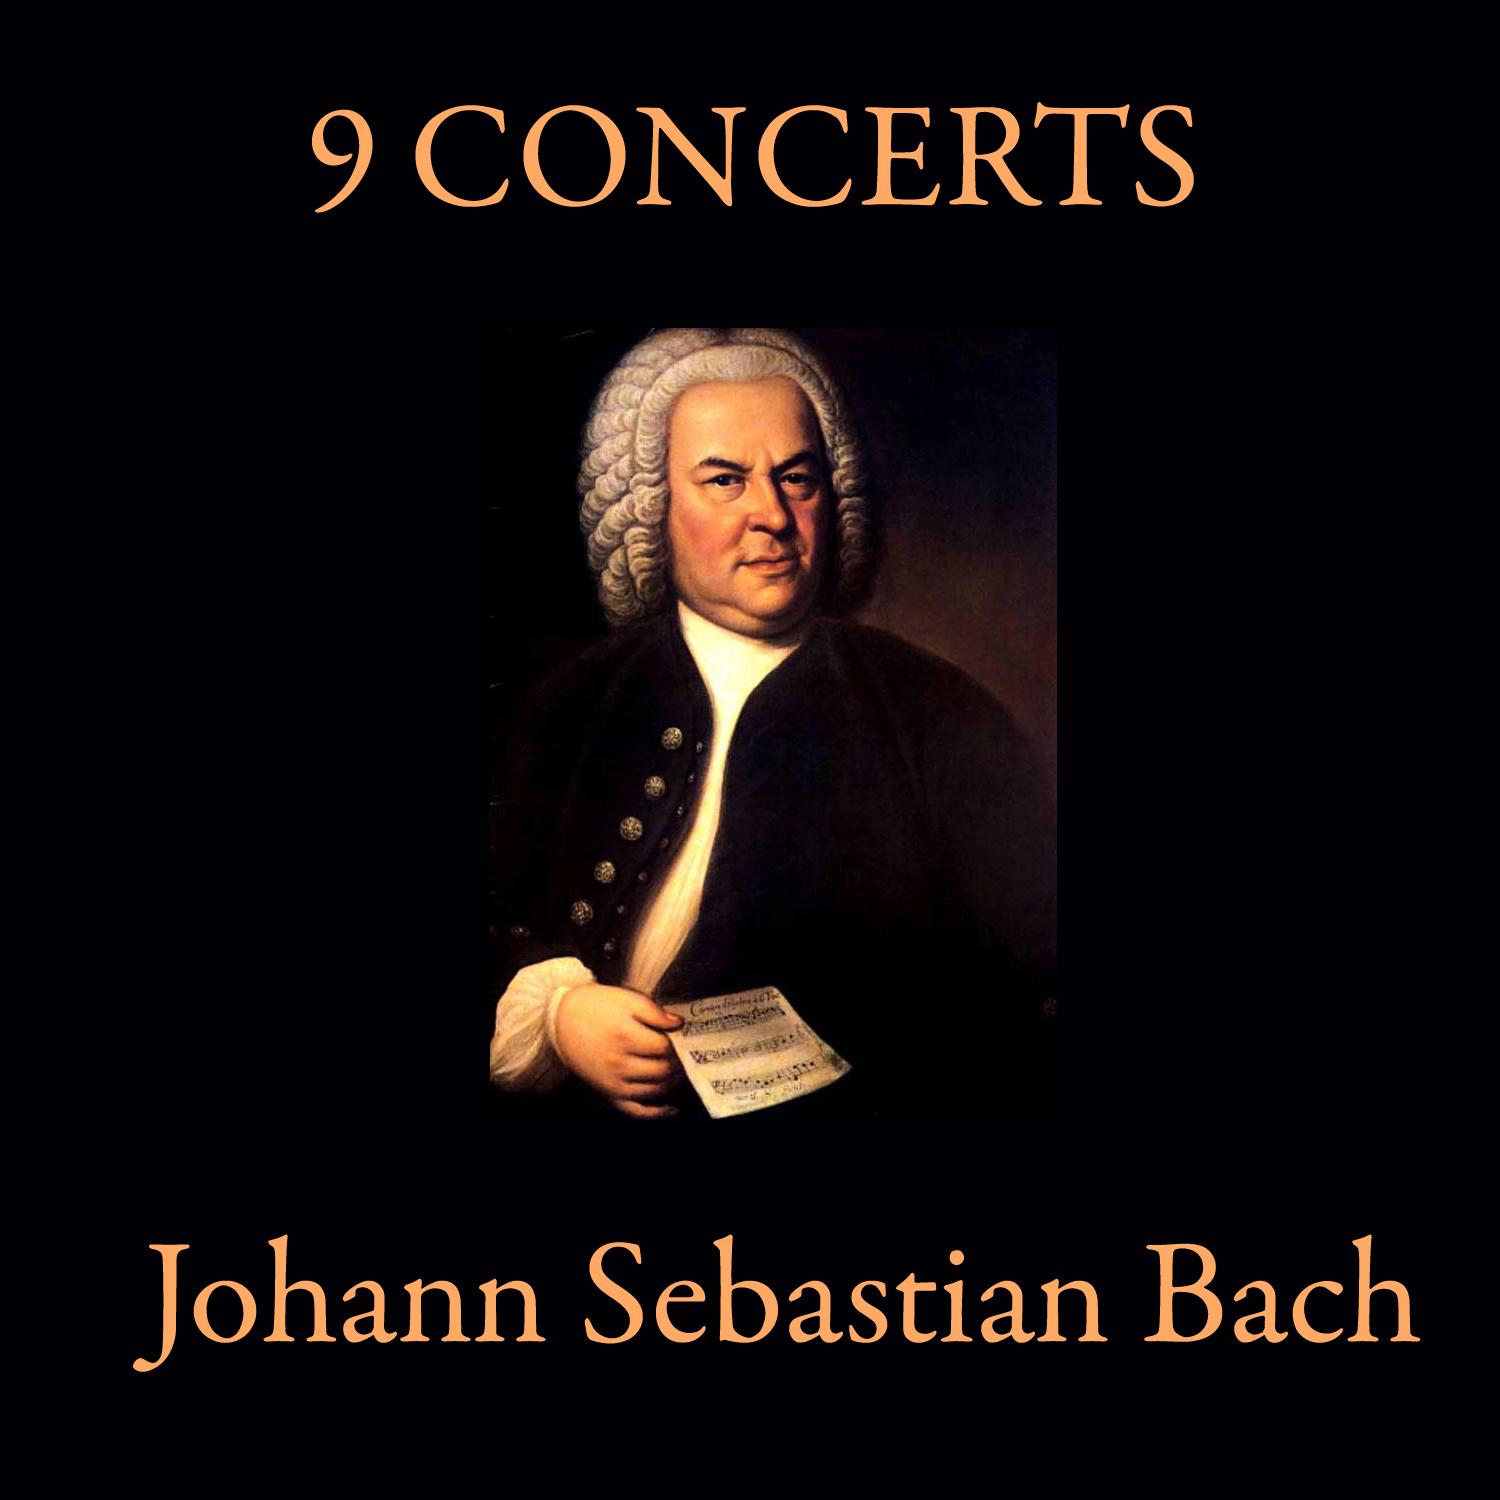 Concerto for violin strings and basso continuo in A minor (BWV 1041) Andante